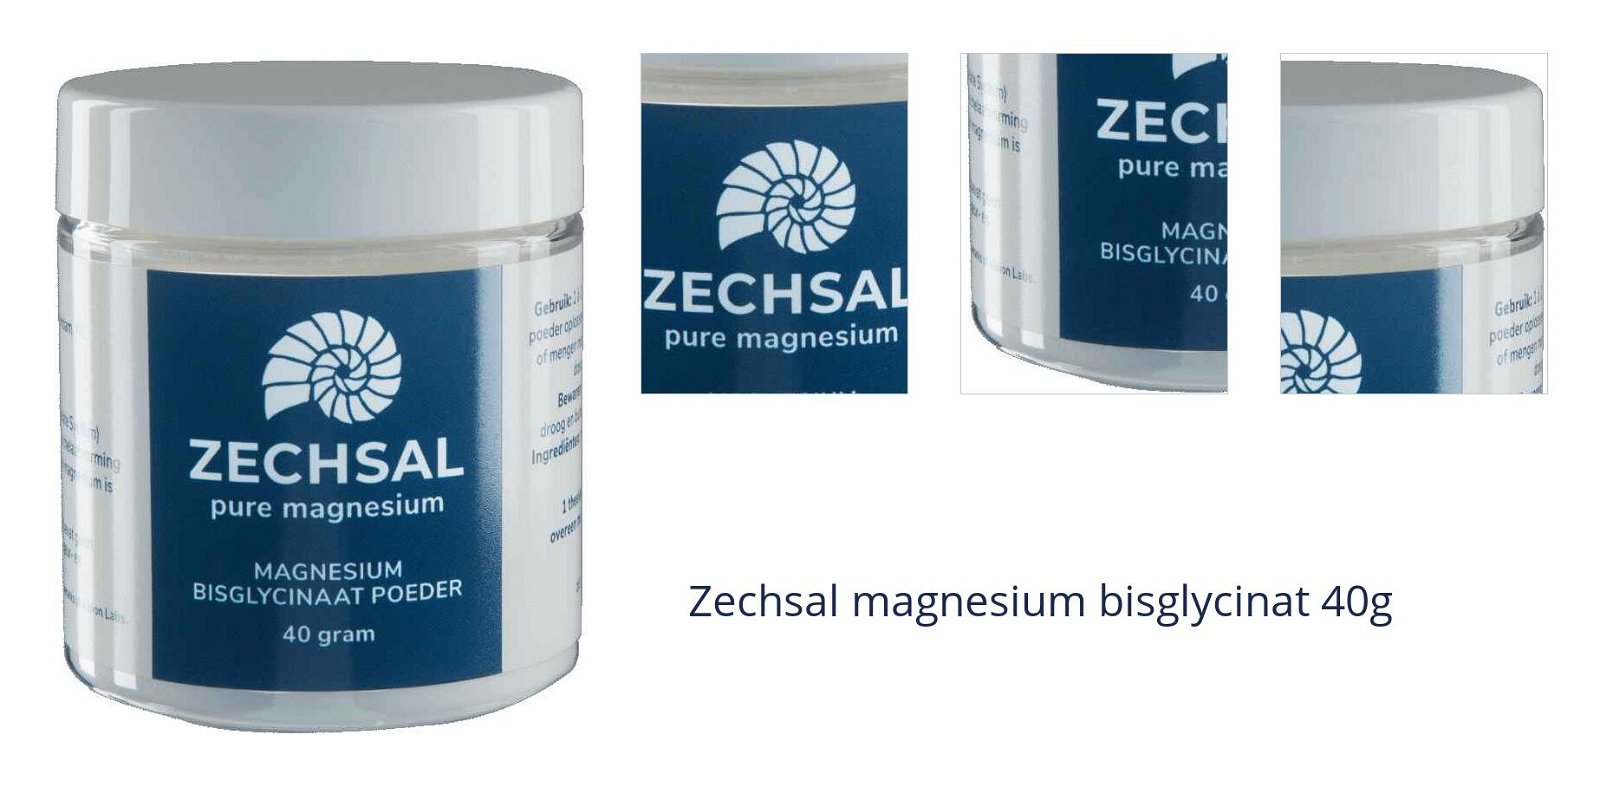 Zechsal magnesium bisglycinat 40g 7